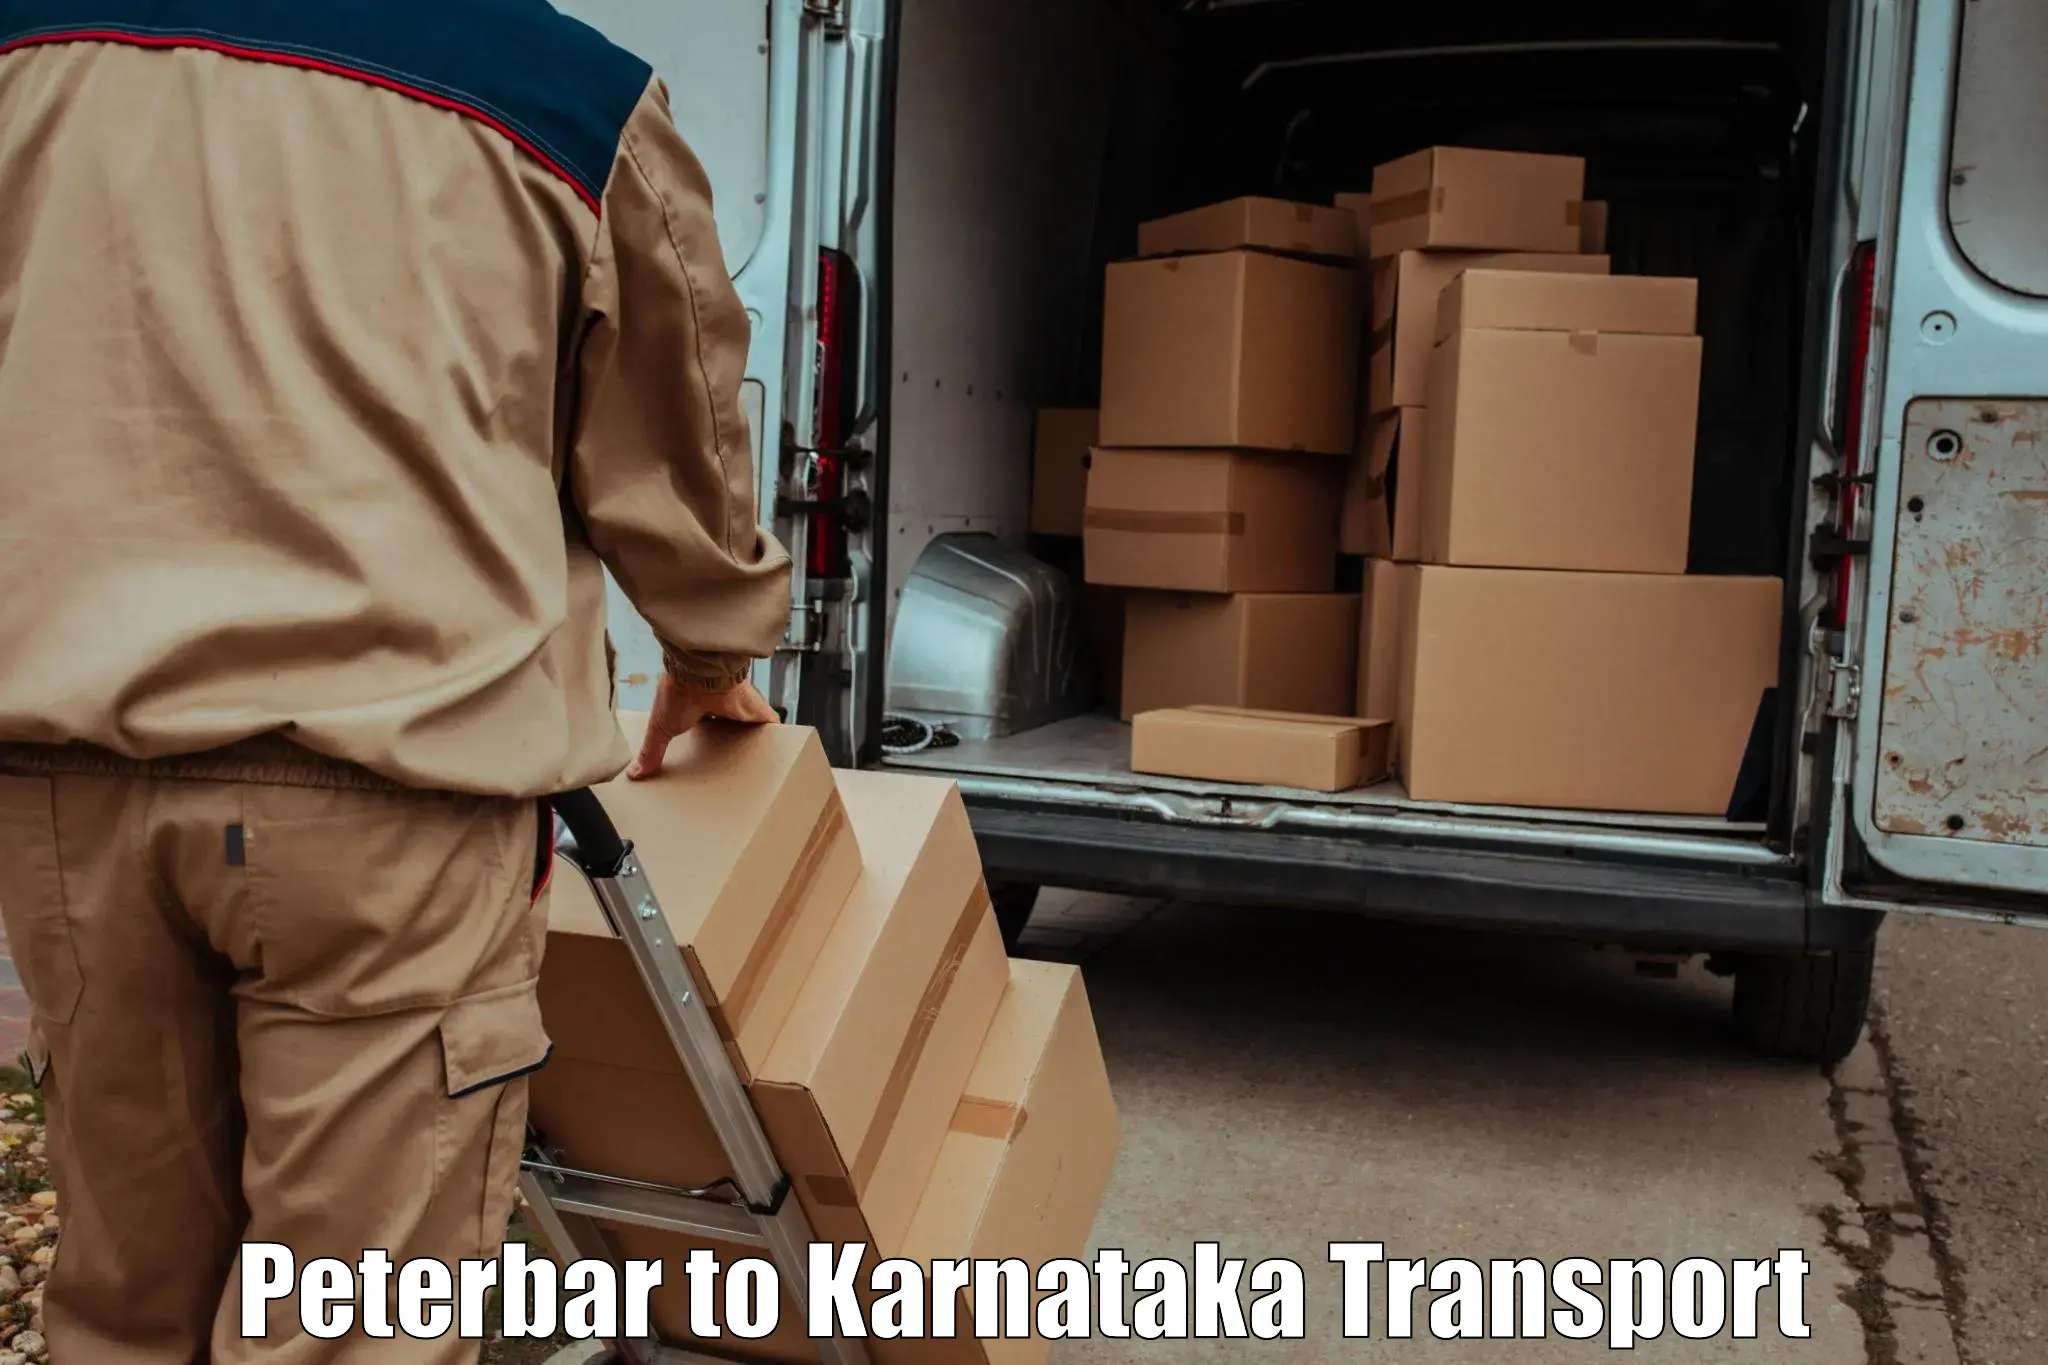 Transportation services Peterbar to Mangalore